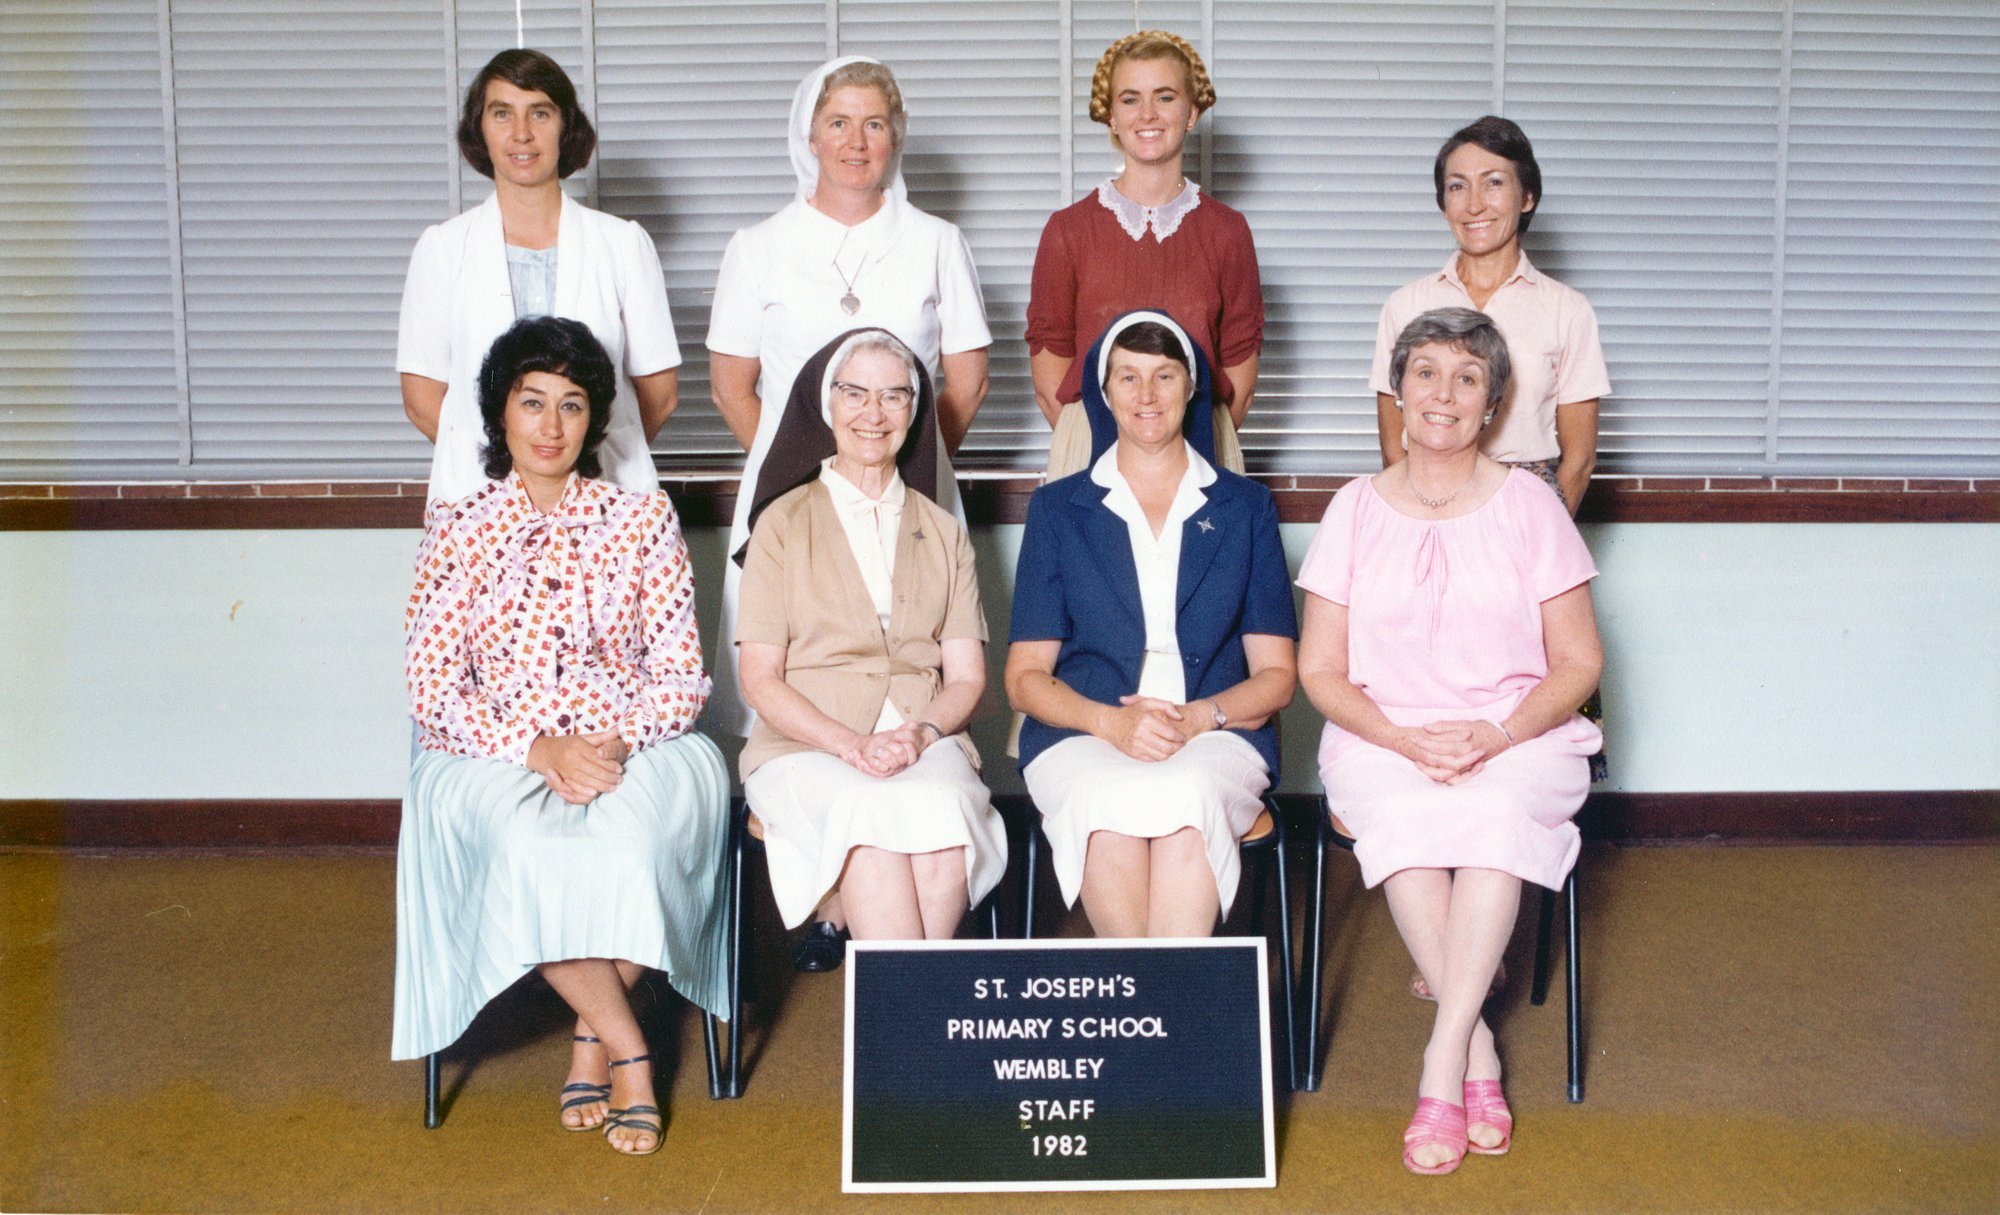  1982 - St Joseph’s Primary School Staff photo Back L-R: Wendy Lloyd, Sister Dorothea Hickey, Josephine Connolly, Marion Prentice. Front: Unknown, Sister Jean Linklater, Sister Bernice Tonkin, Carmel Hynes. 